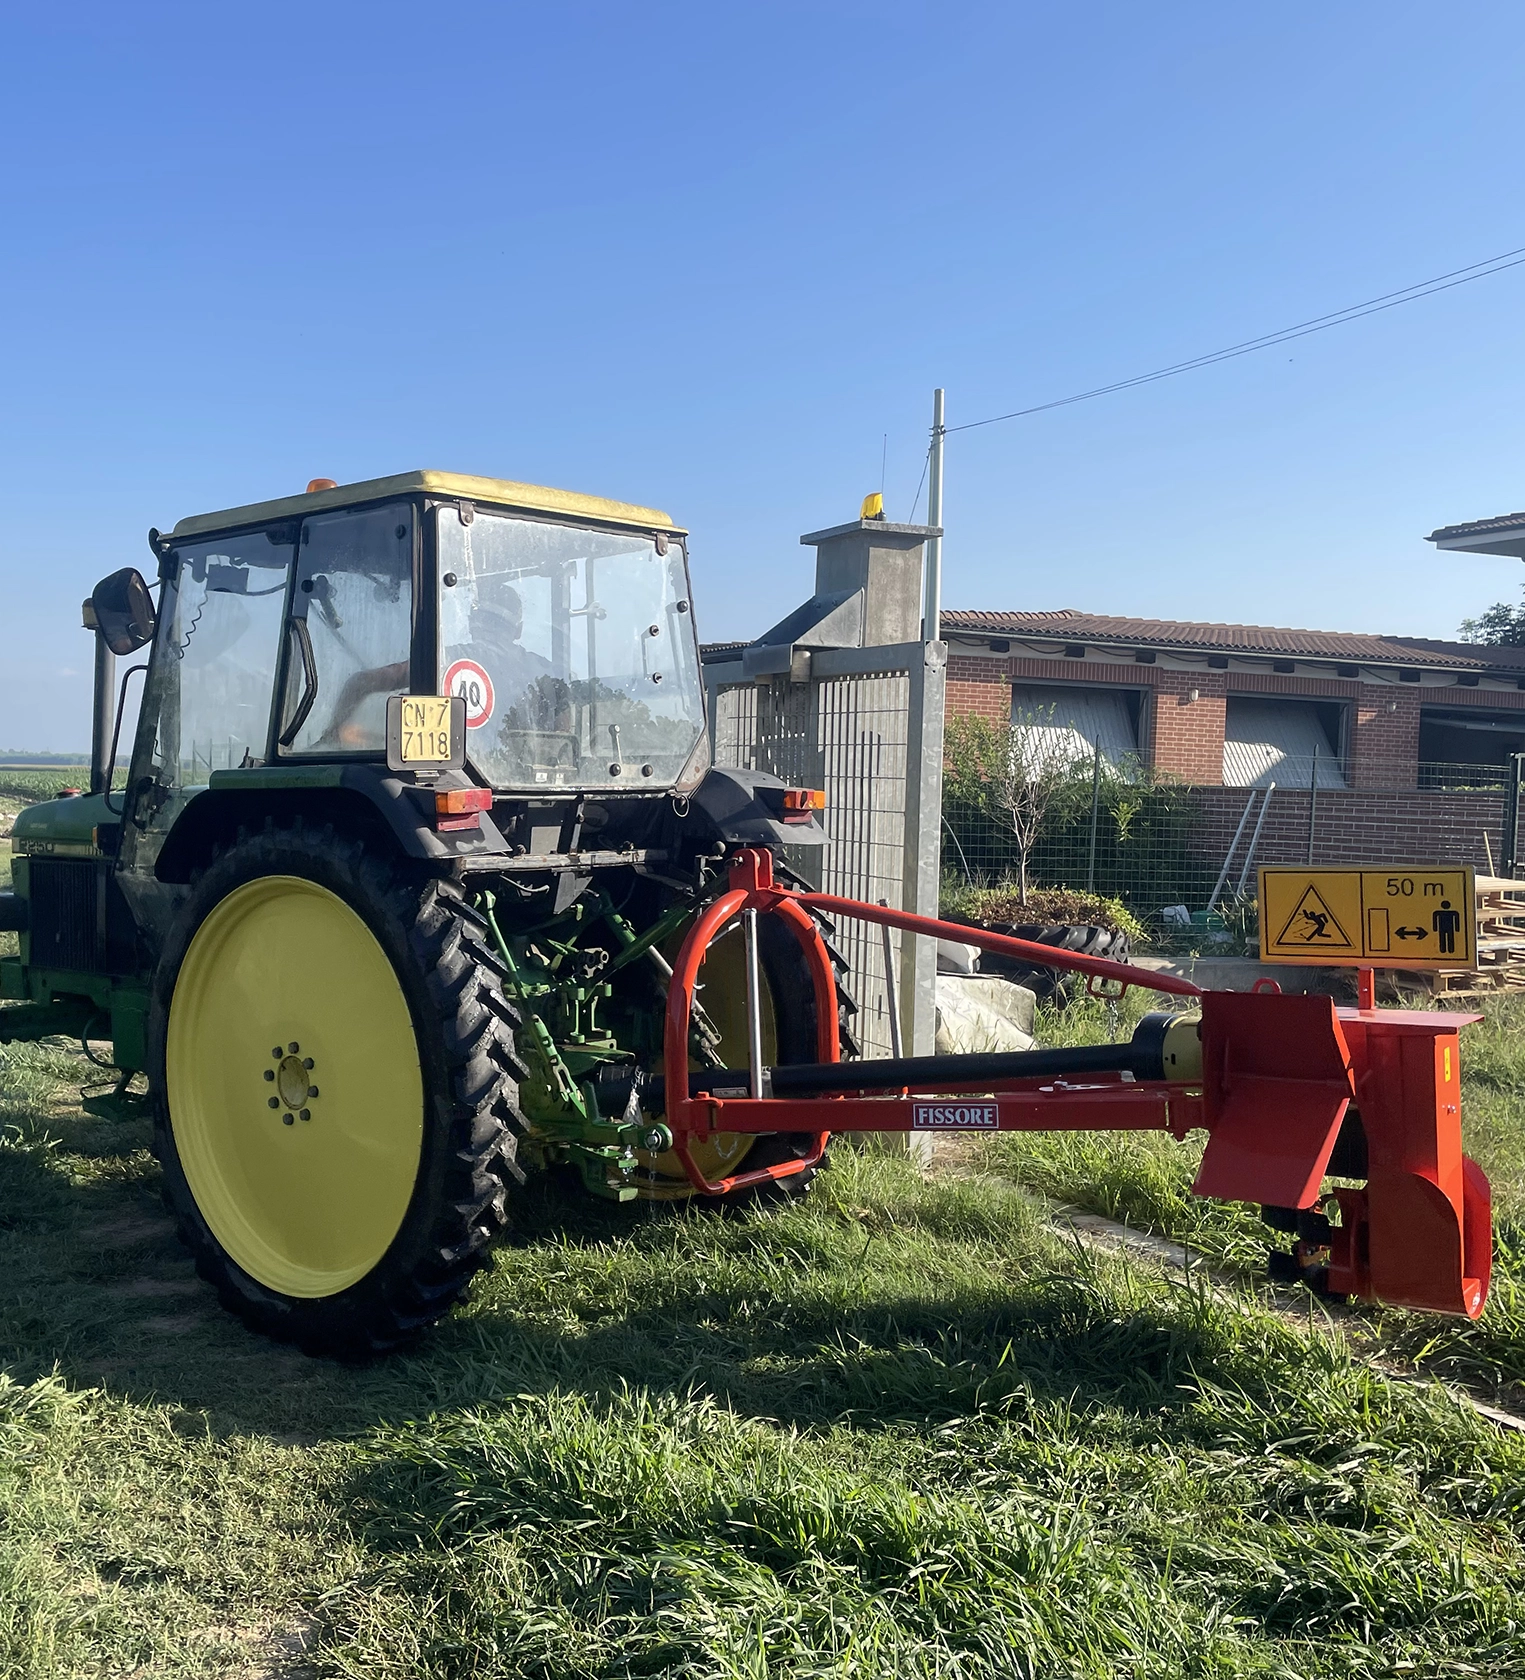 Fissore - Agricultural and snow machines in Cavallermaggiore